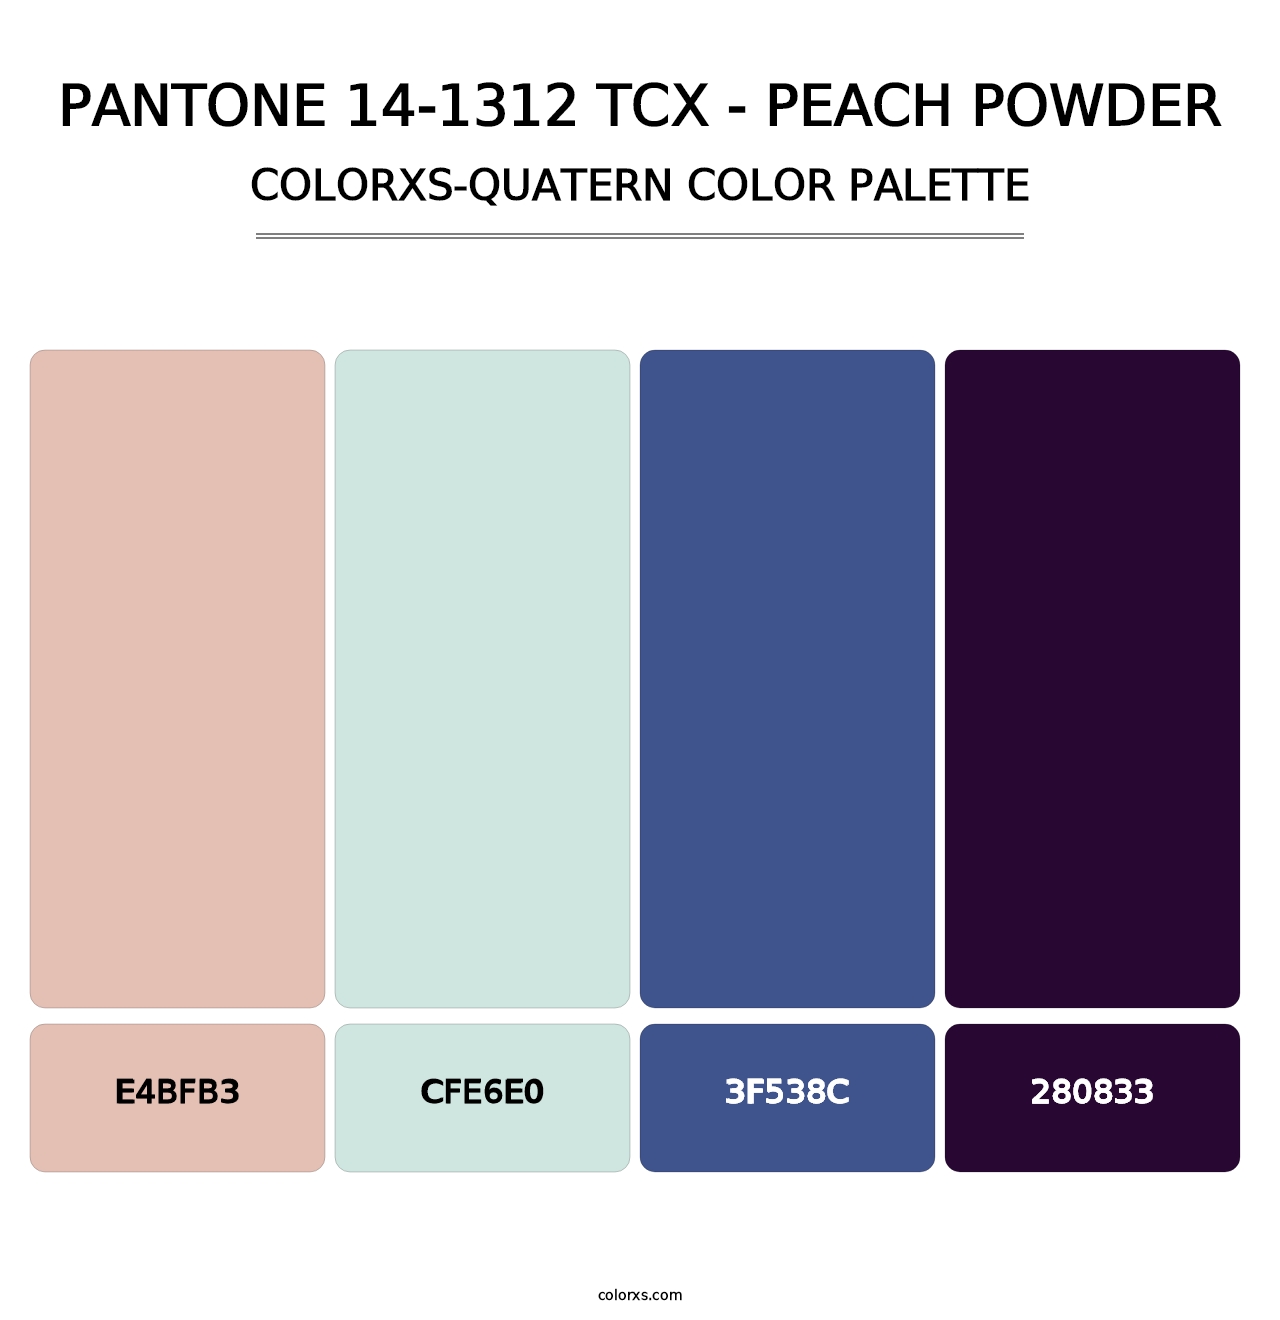 PANTONE 14-1312 TCX - Peach Powder - Colorxs Quatern Palette